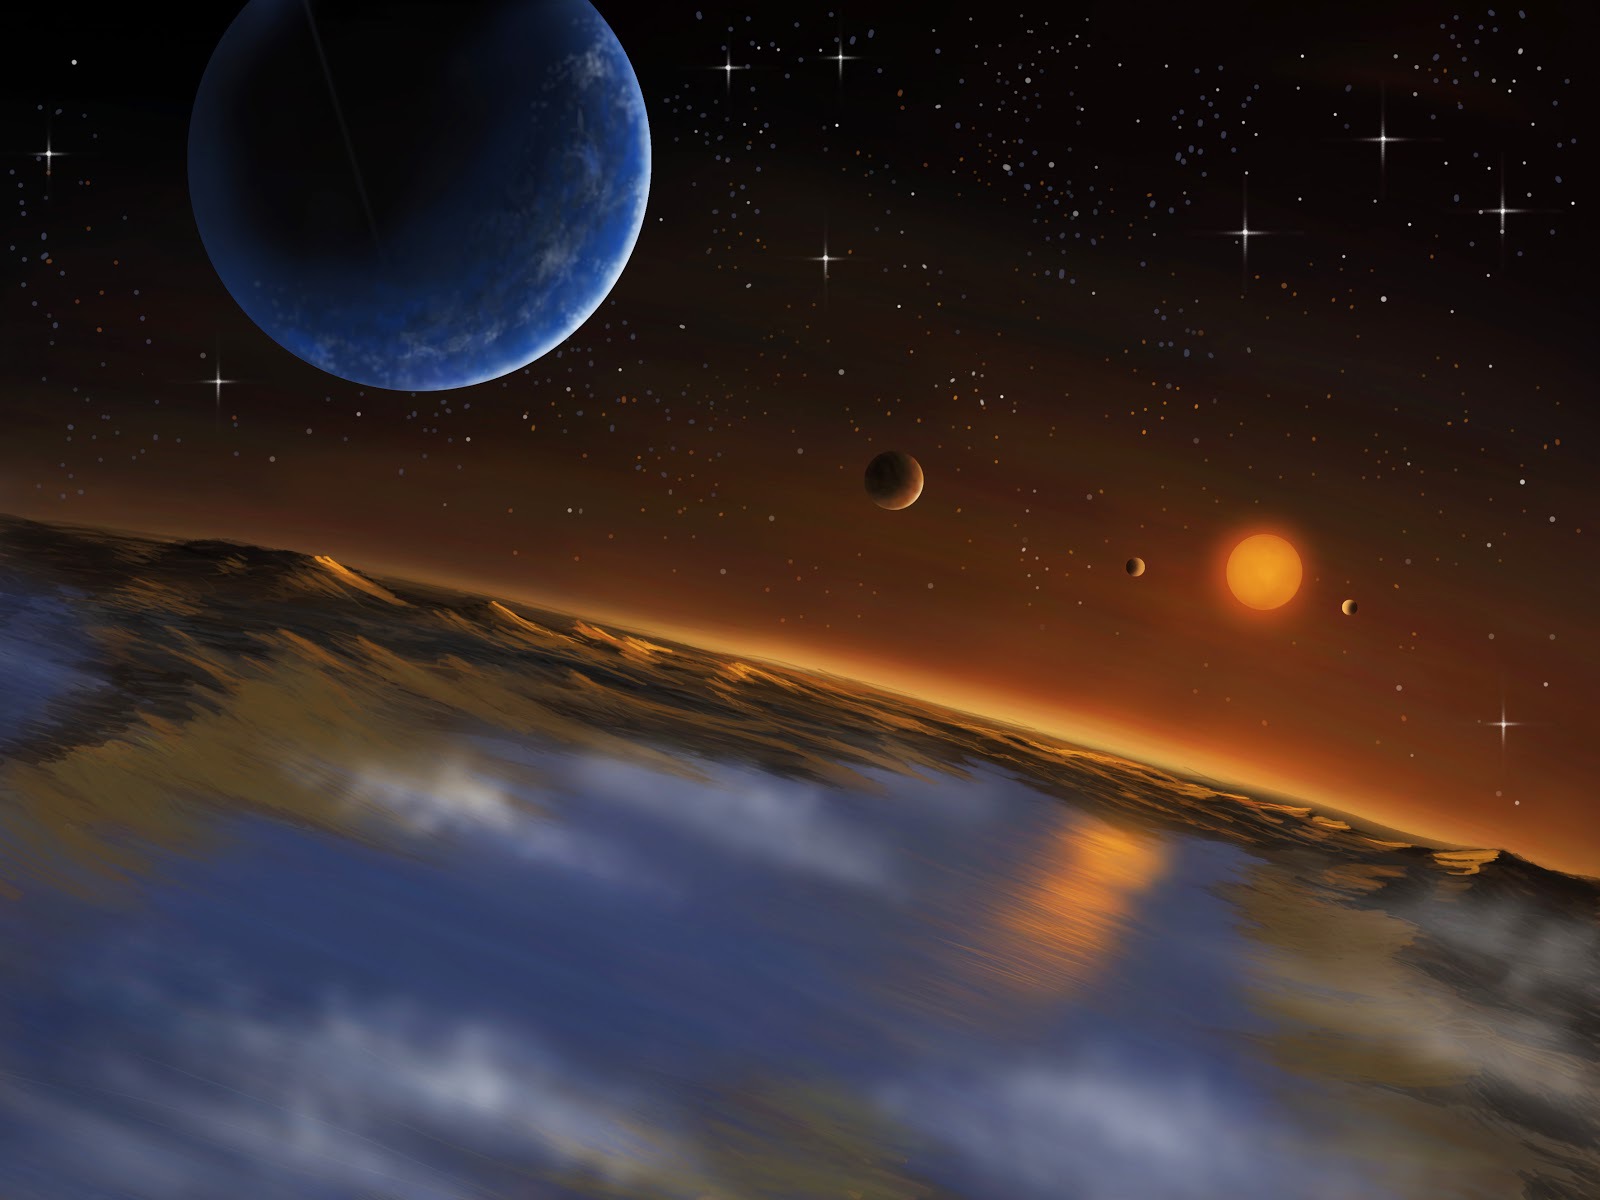 Artist concept of the planetary system Kepler 62.